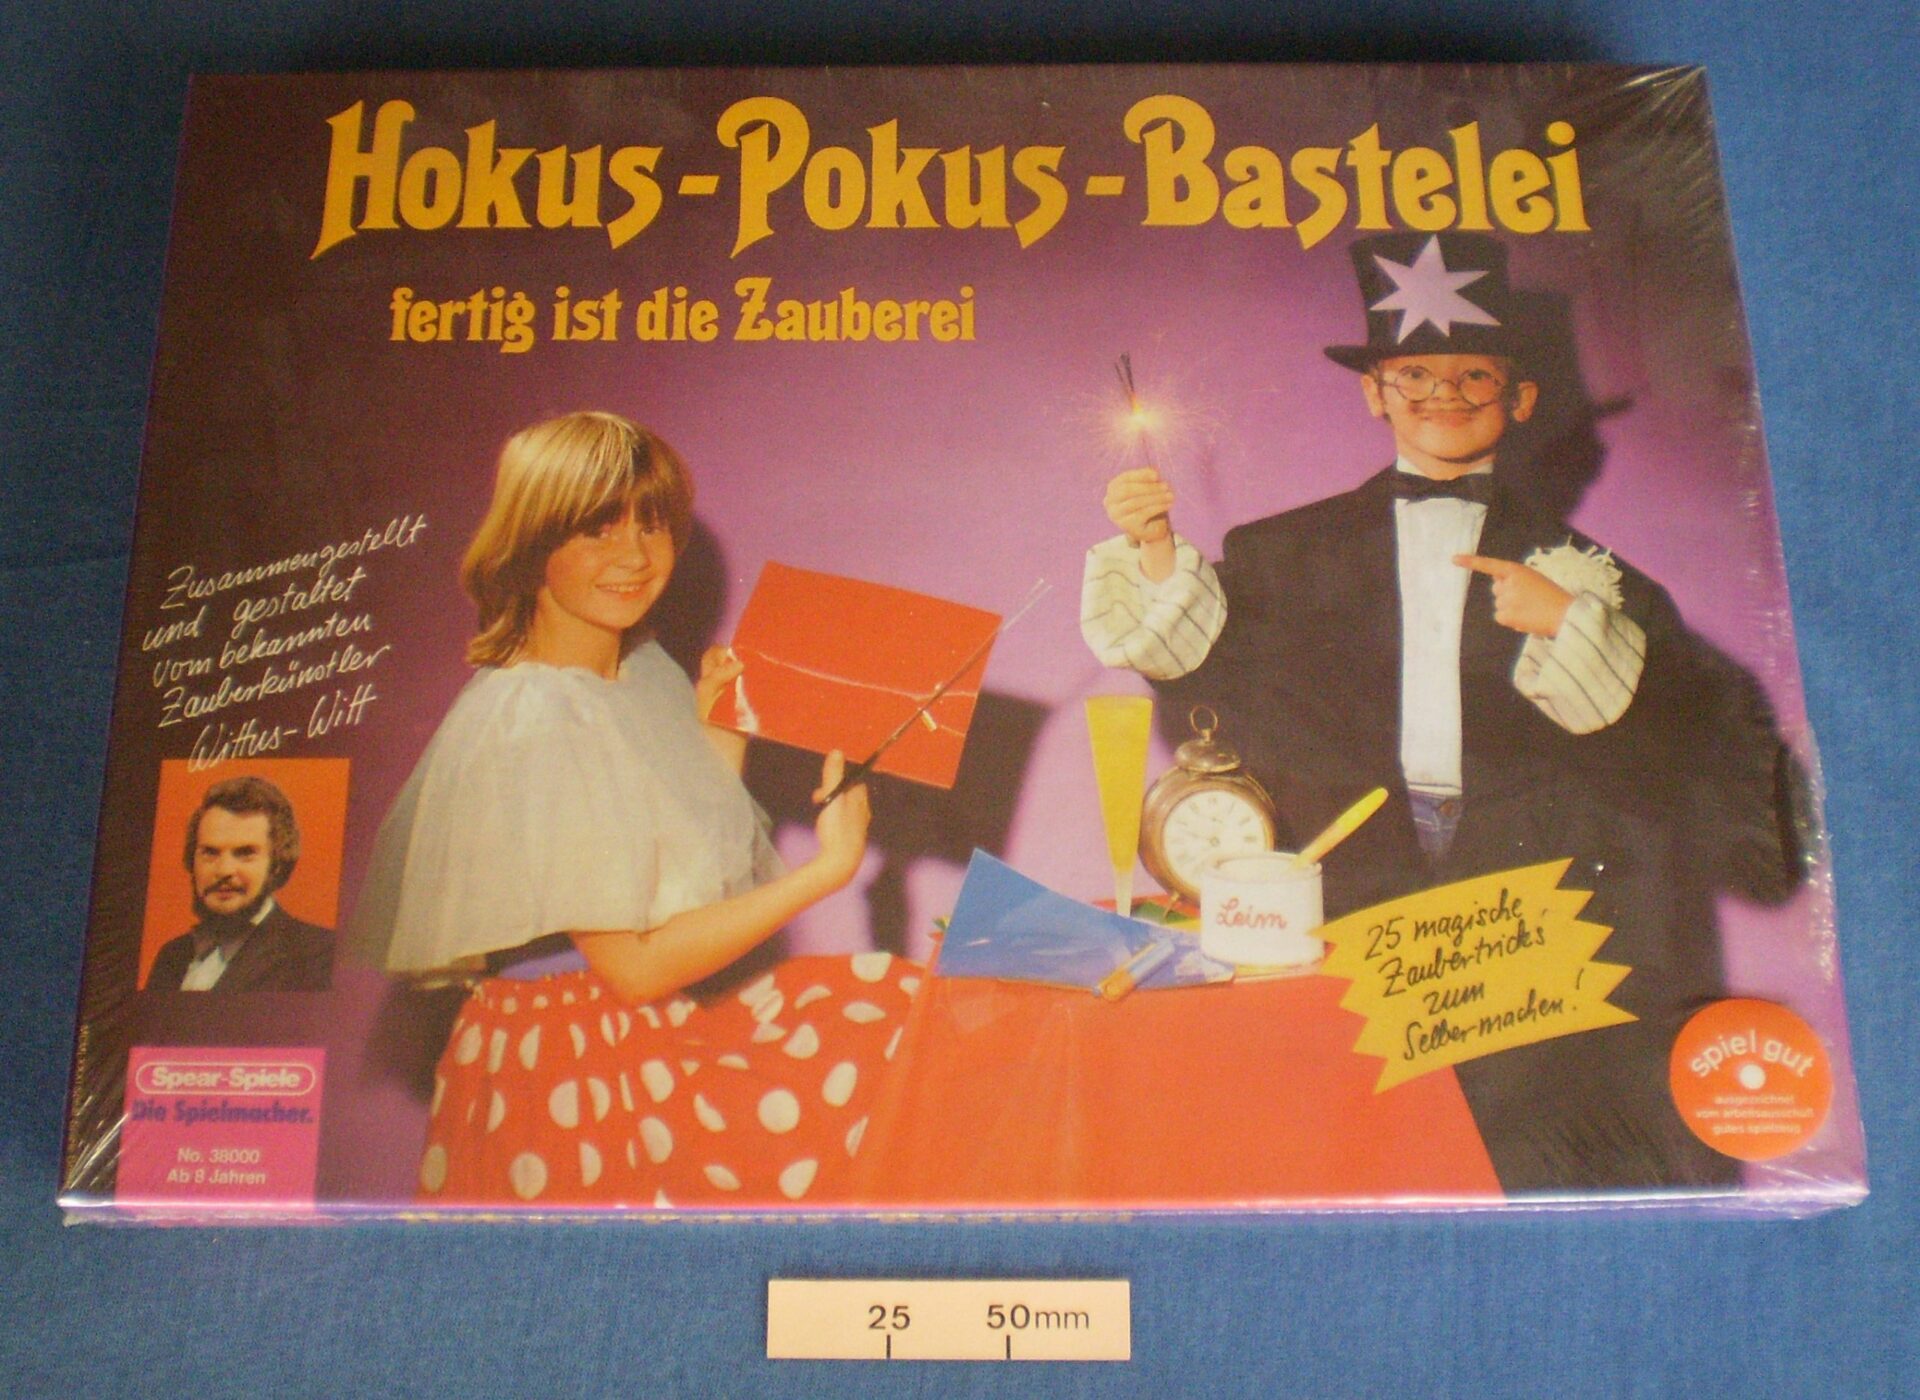 Hokus-Pokus-Bastelei magic set